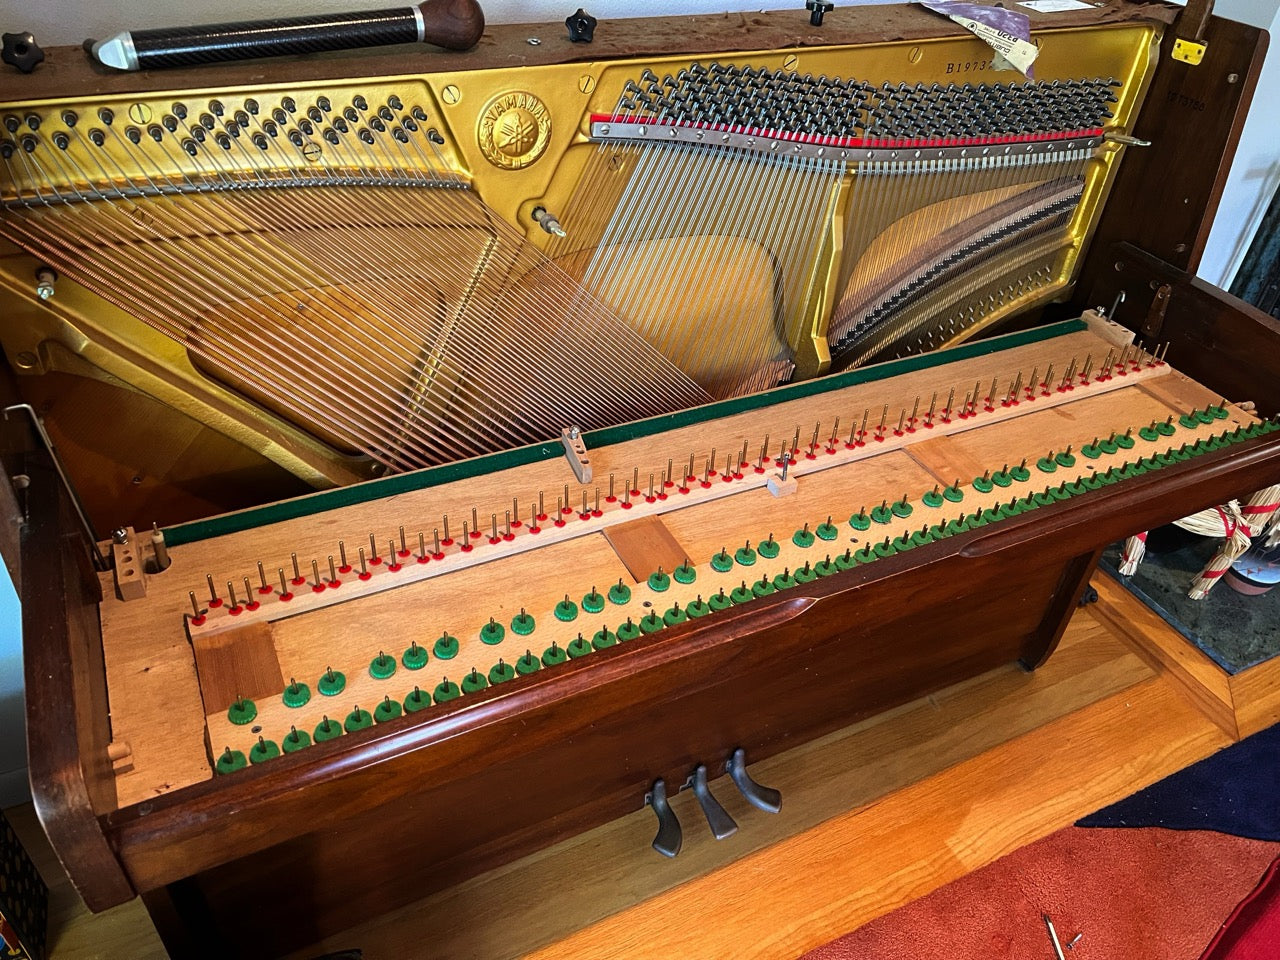 Inside a Piano - Artisan Piano Tuning and Restoration